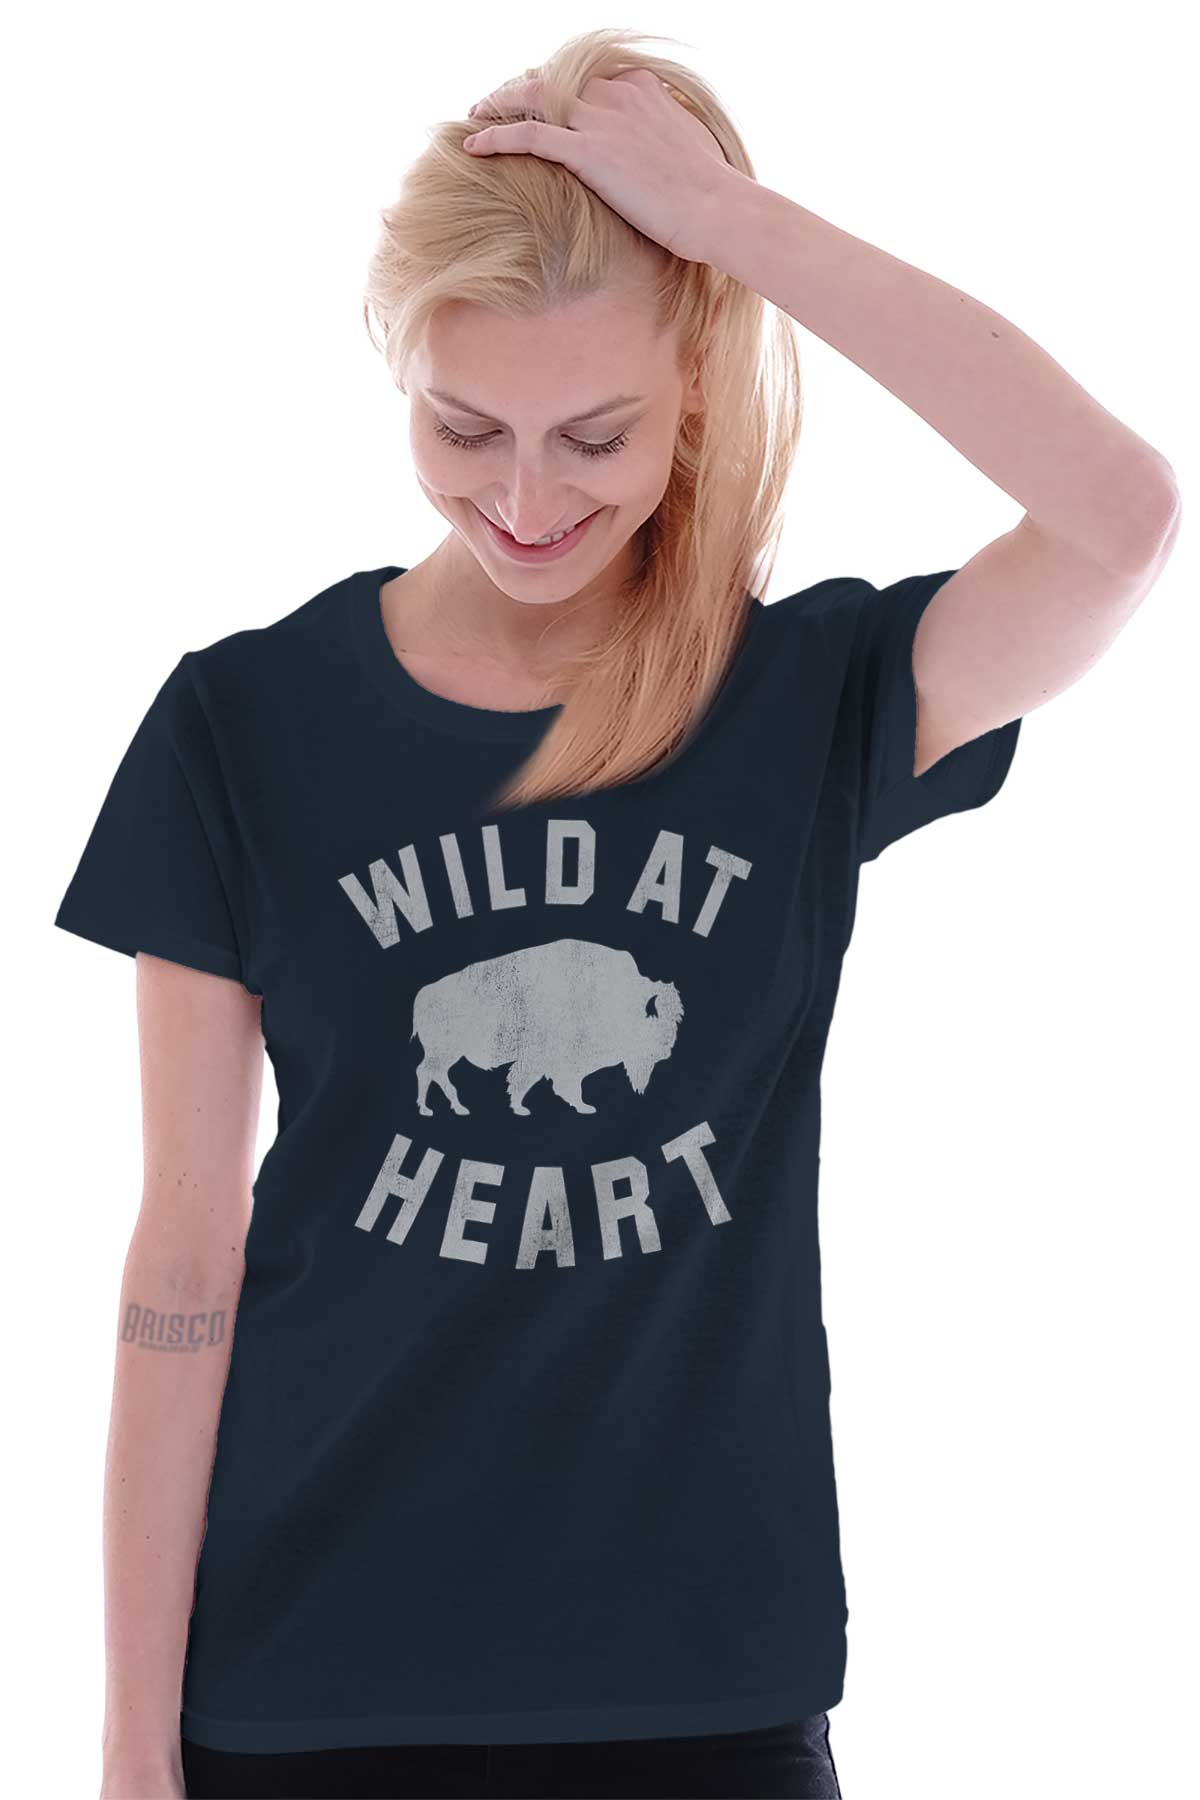 wild at heart shirts david lynch